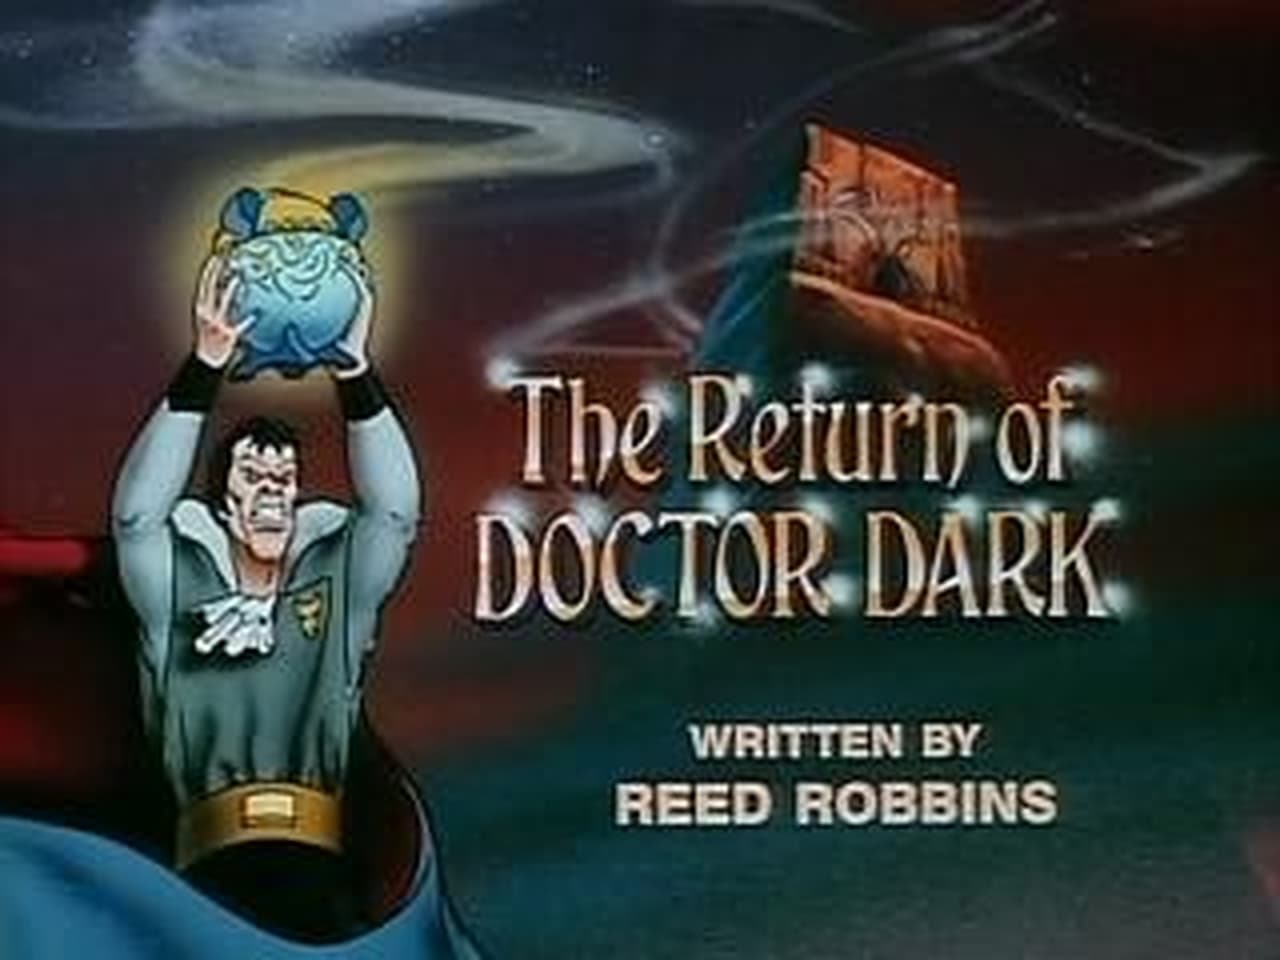 The Return of Doctor Dark